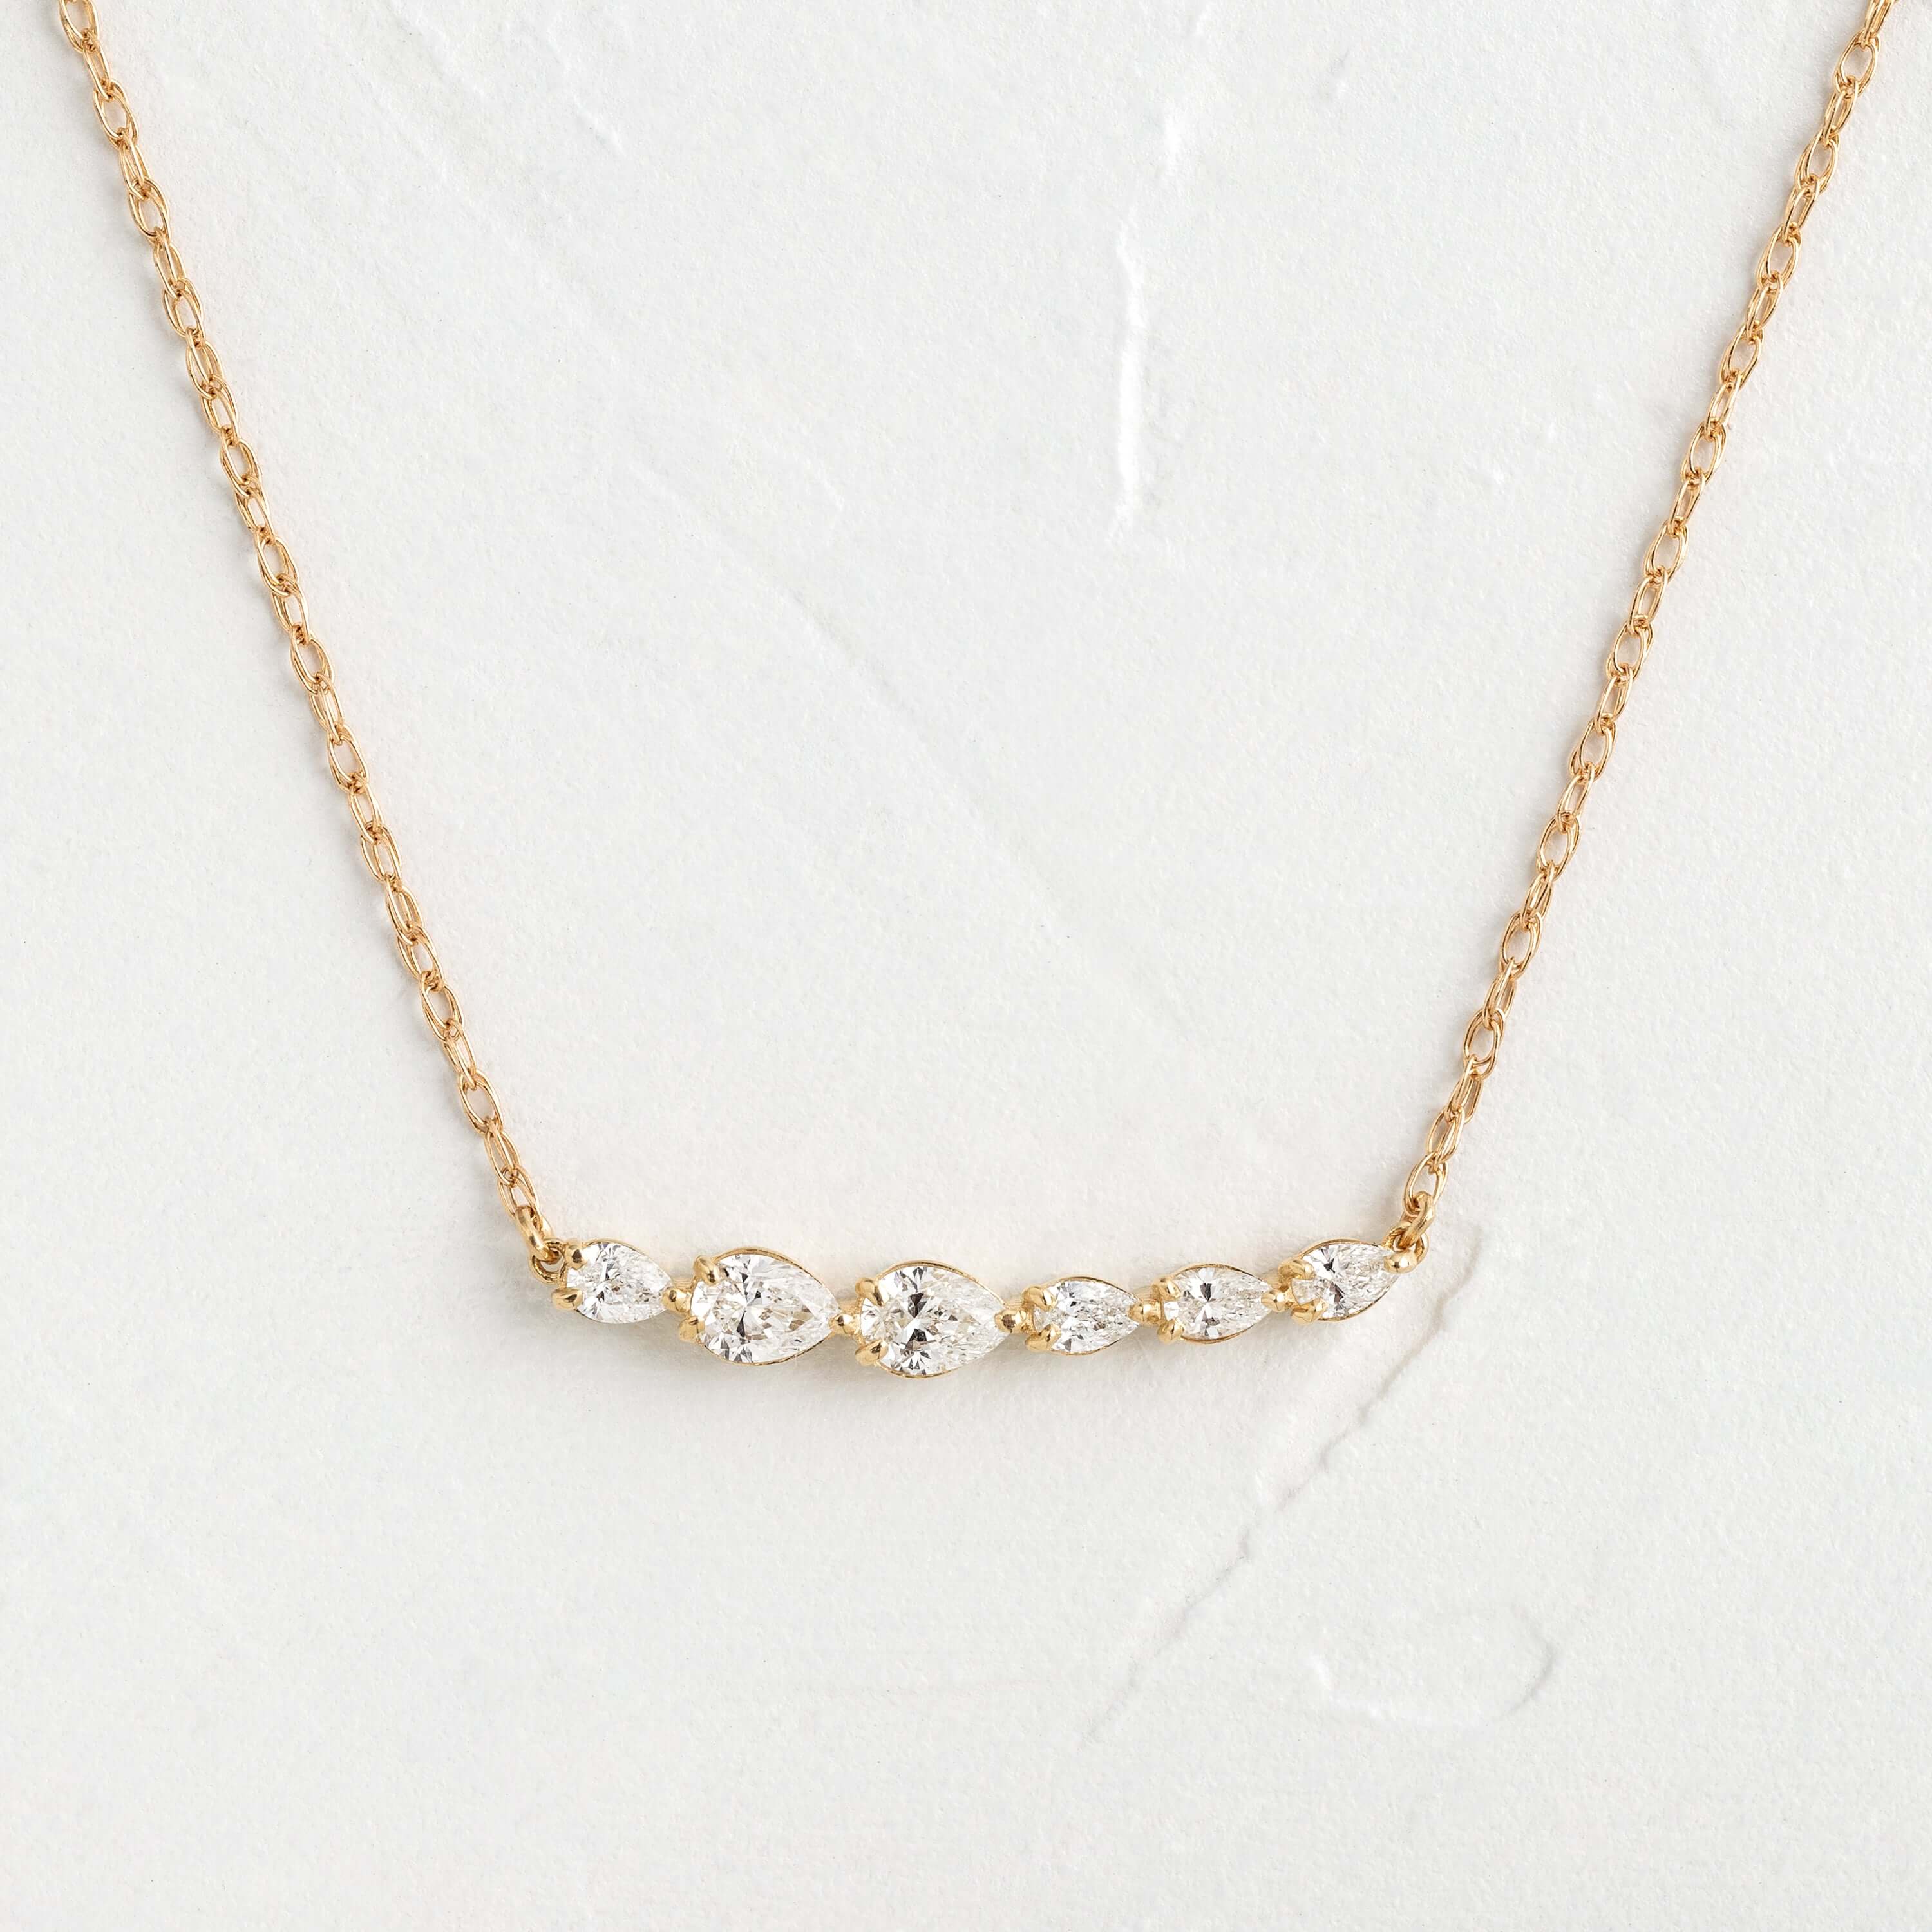 Fluency Necklace | 16 14K Gold Chain with Diamonds by Melanie Casey